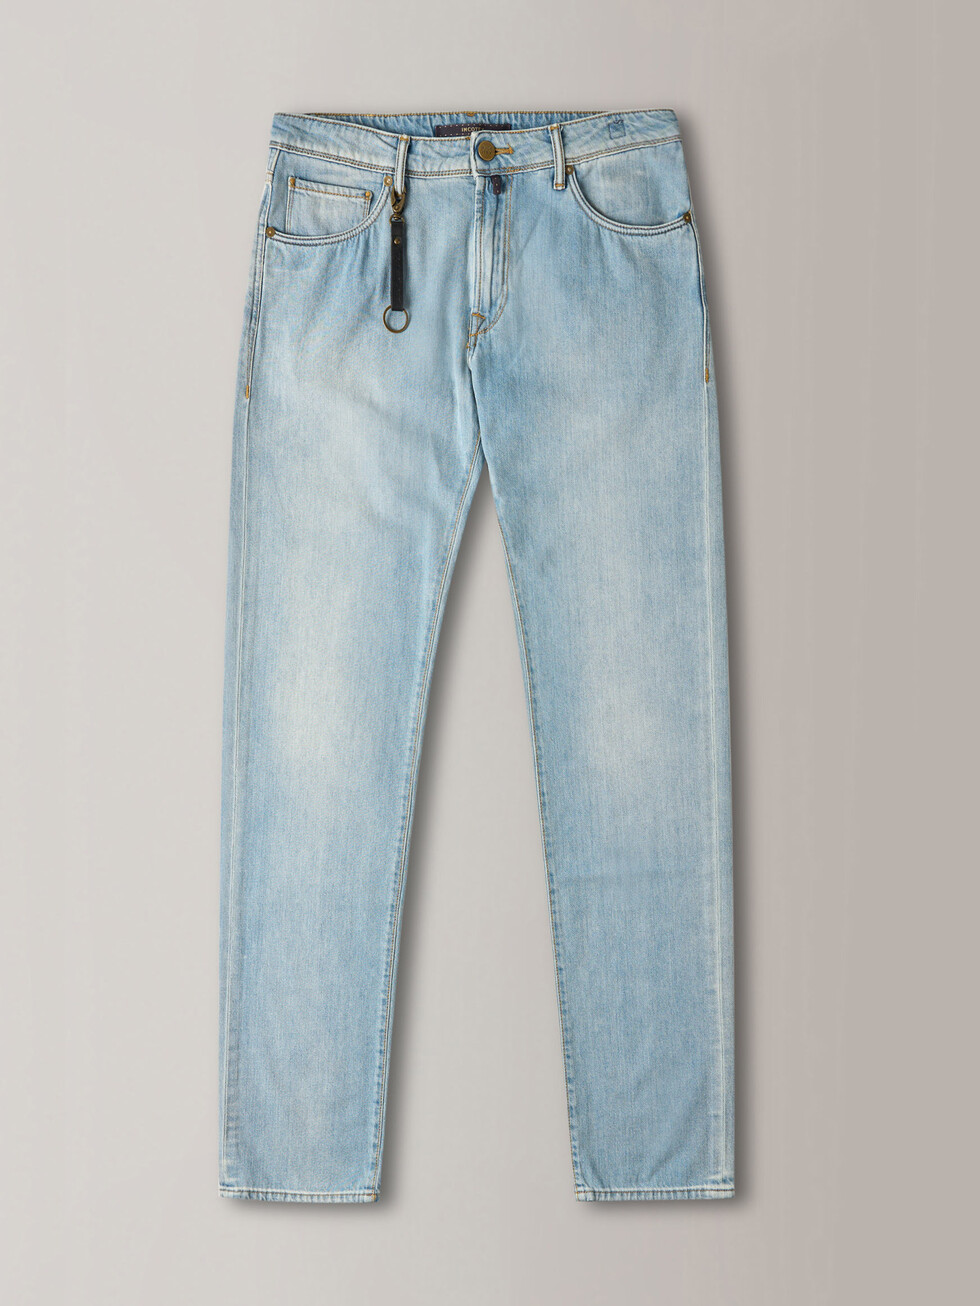 Pantalone cinque tasche regular fit in cotone denim , Incotex Blue Division | Slowear